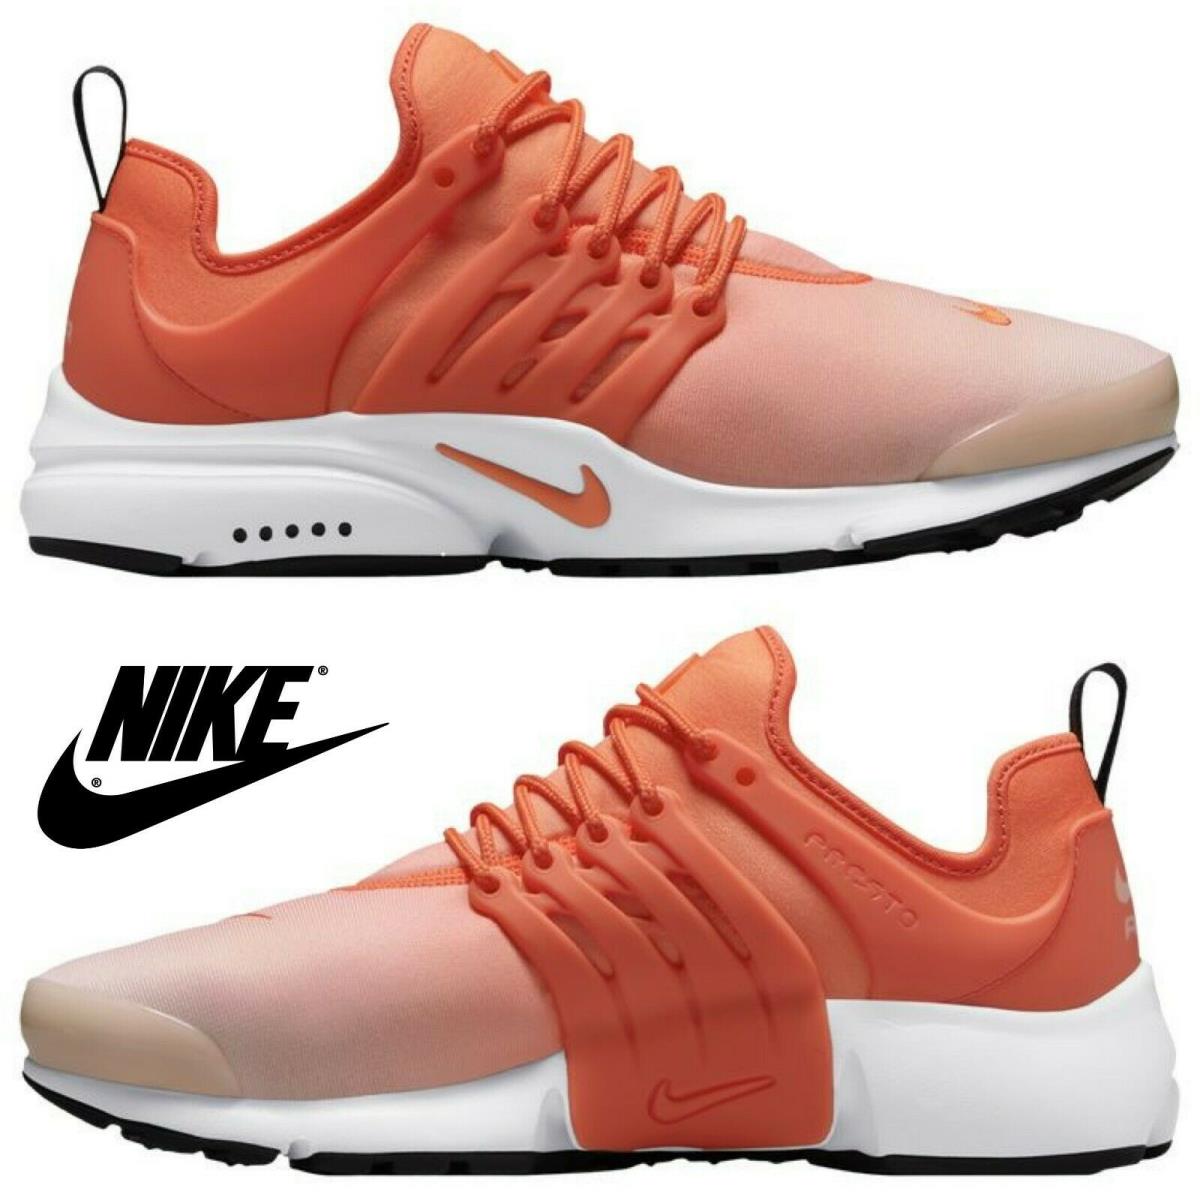 Nike Air Presto Women s Sneakers Casual Shoes Premium Running Sport Gym Orange